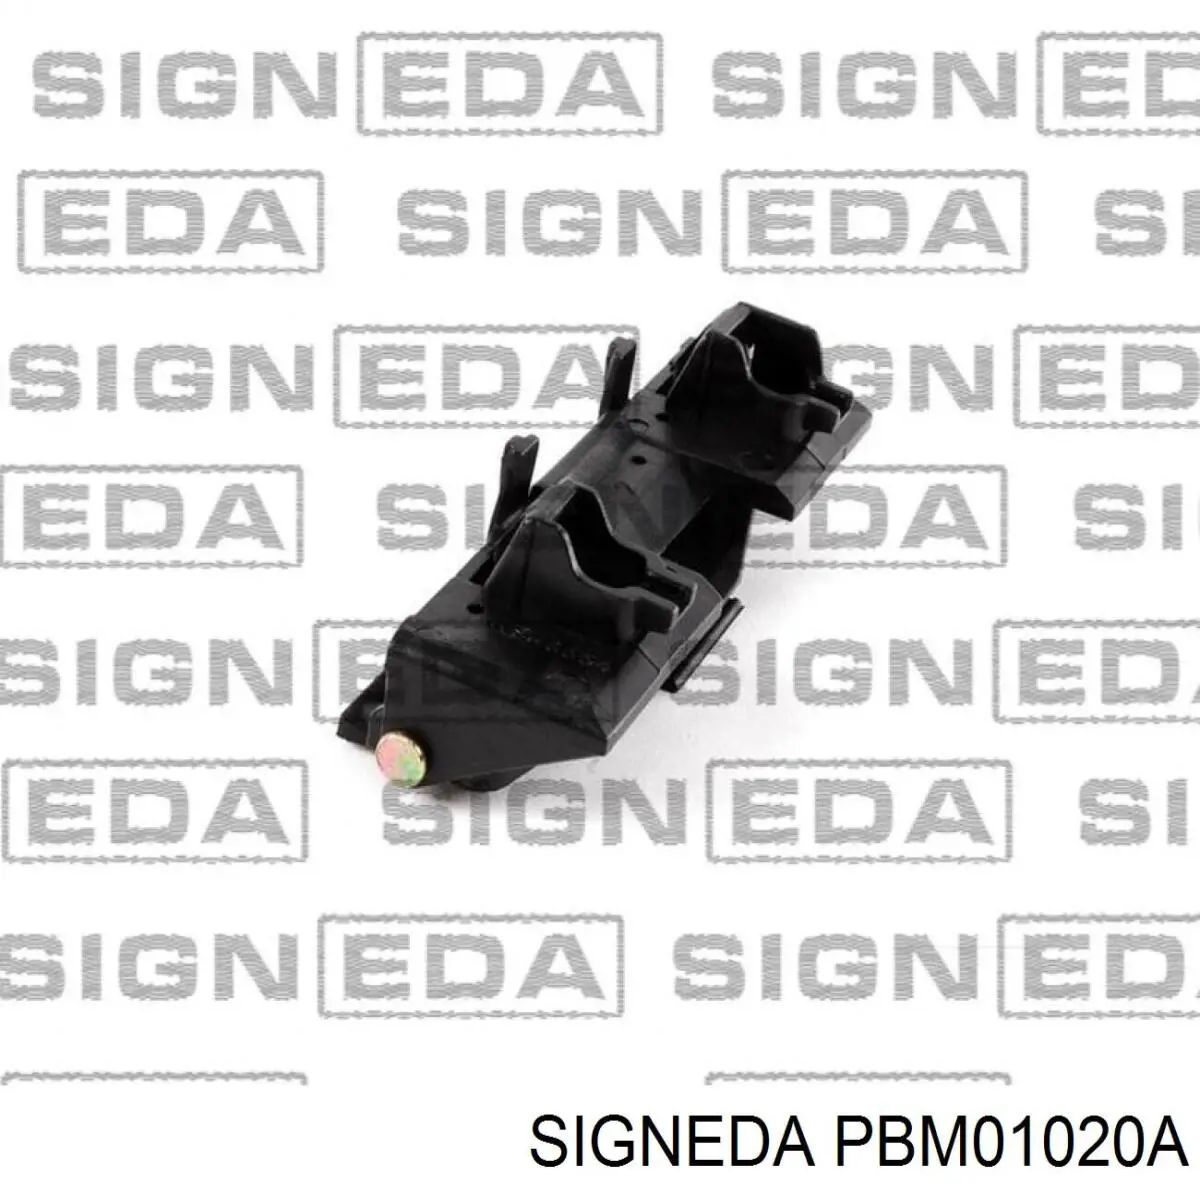 PBM01020A Signeda петля лючка топливного бака